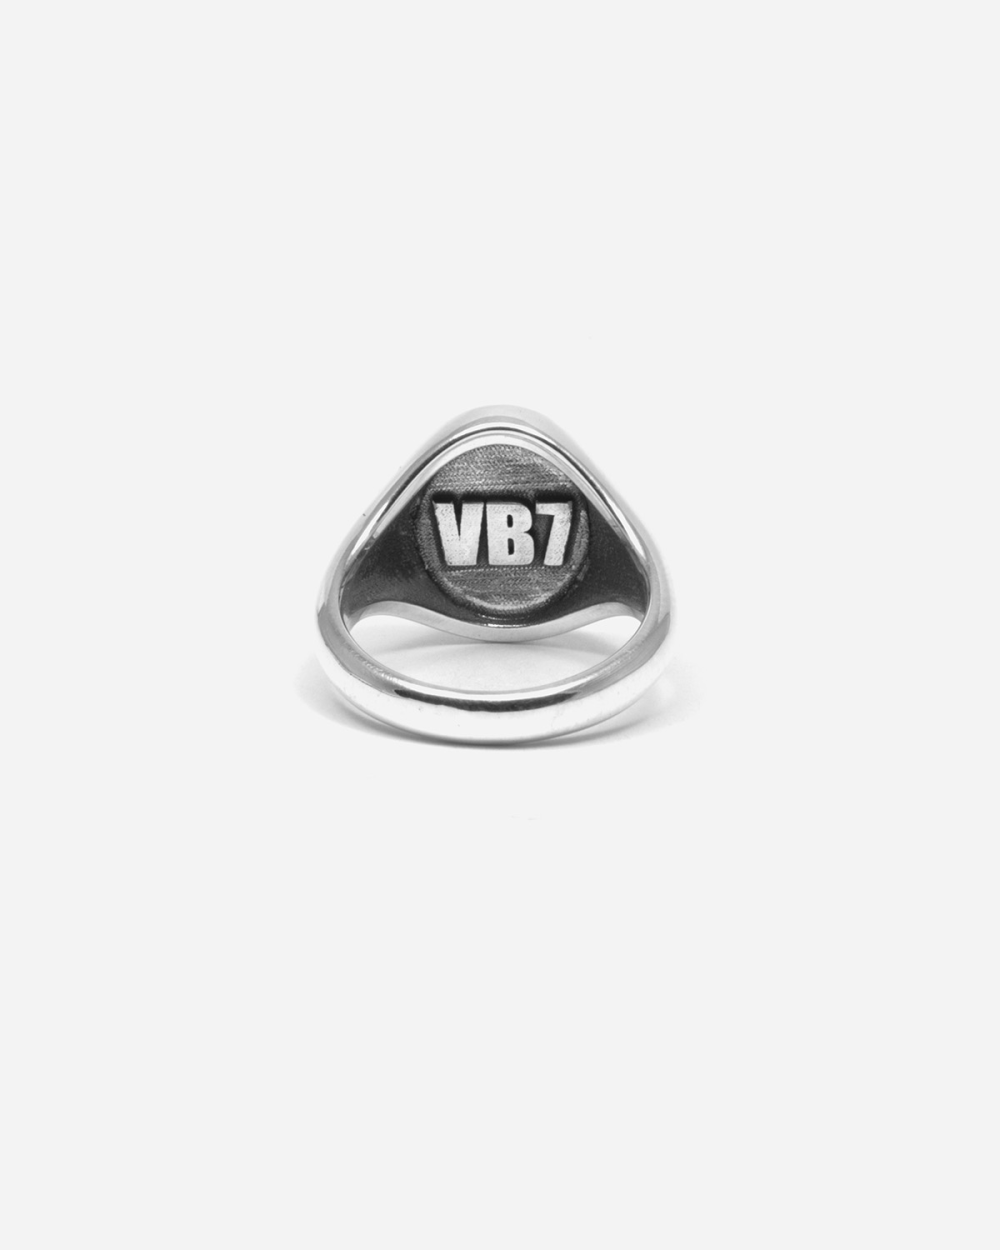 VB7 DEER OVAL SIGNET RING